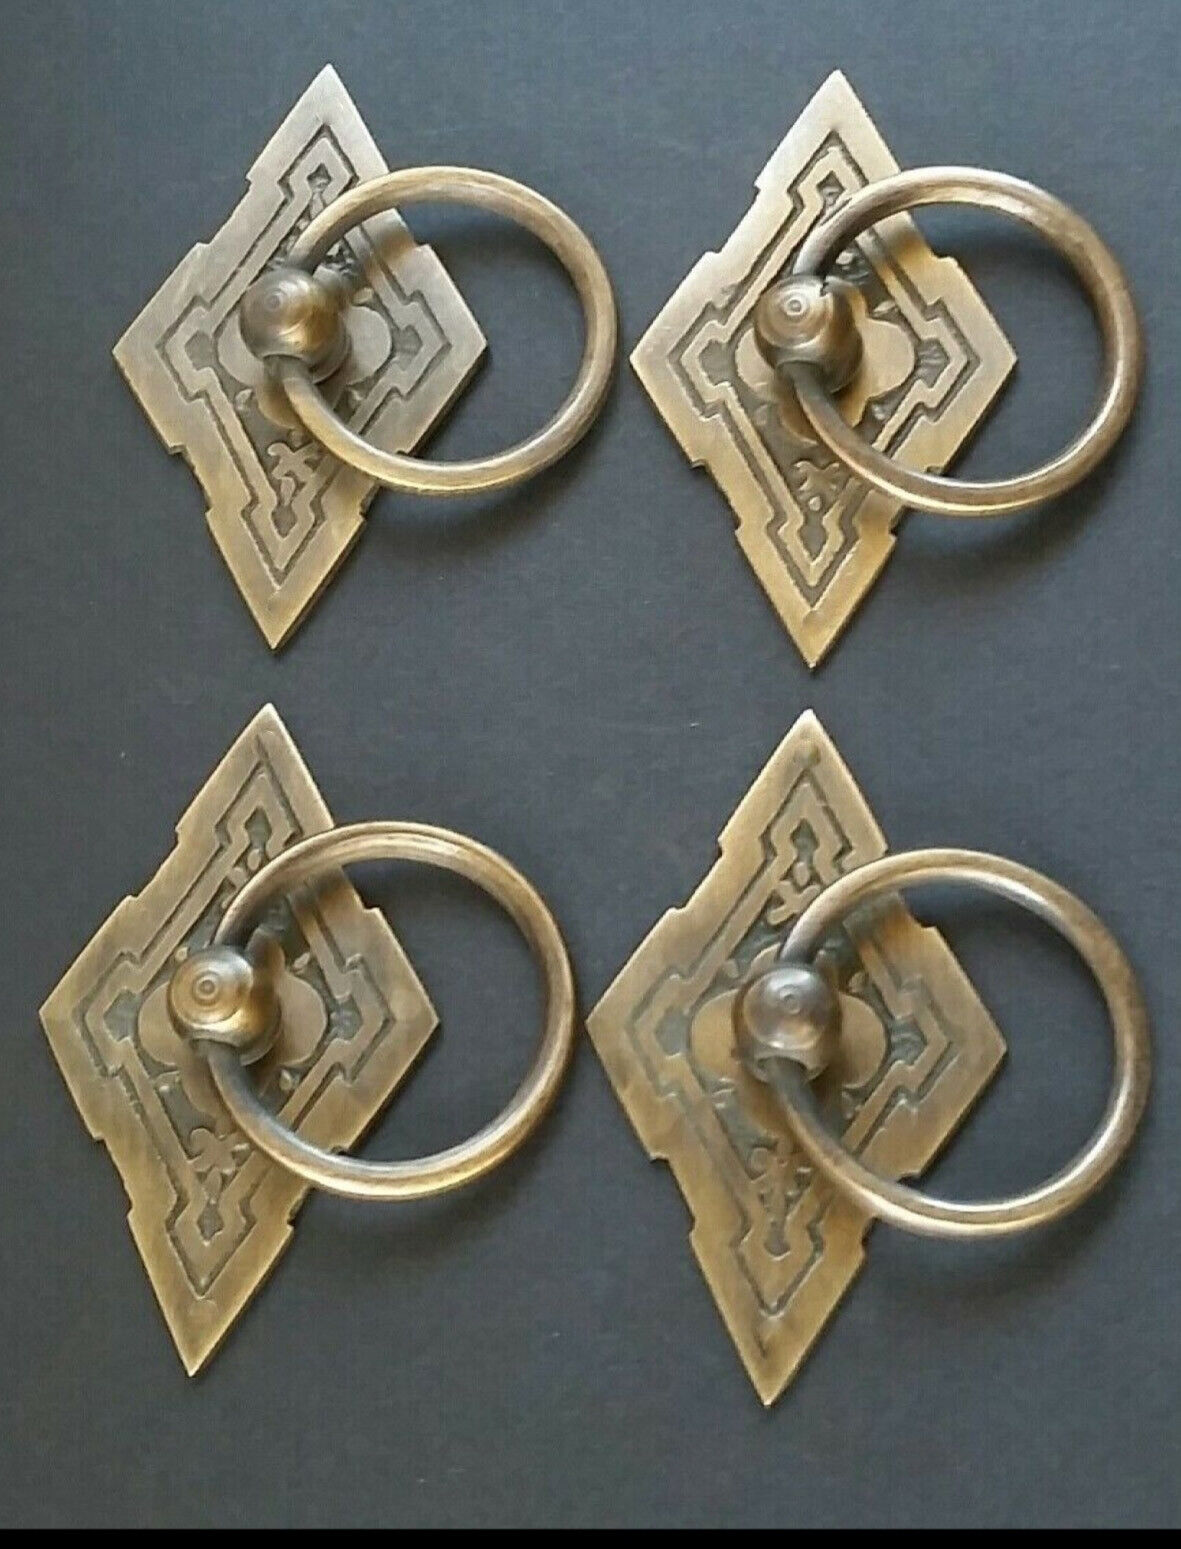 4 x Eastlake Antique Style Brass Ornate Ring Pulls Handles 2-3/8" wide #H15 Без бренда - фотография #6